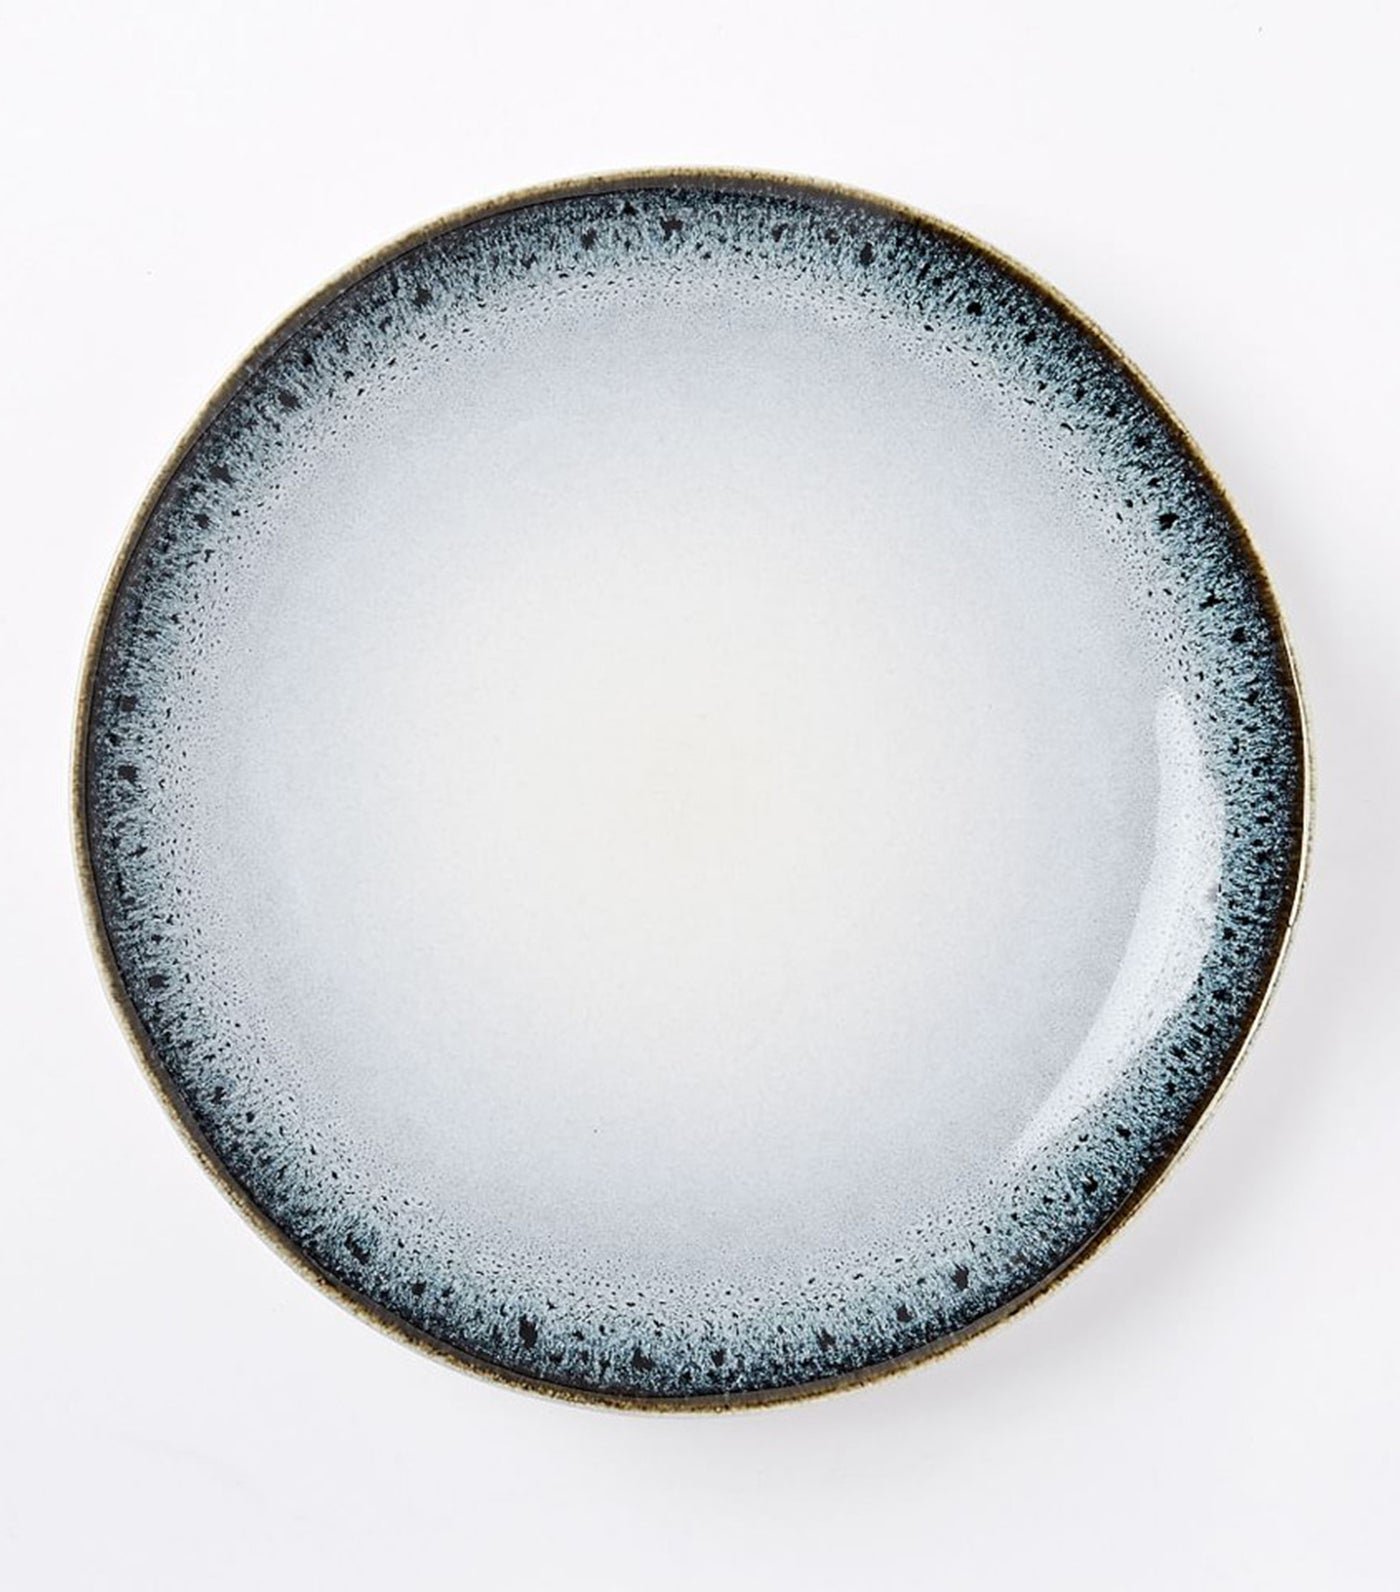 west elm Reactive Glaze Dinnerware Collection - Black/White